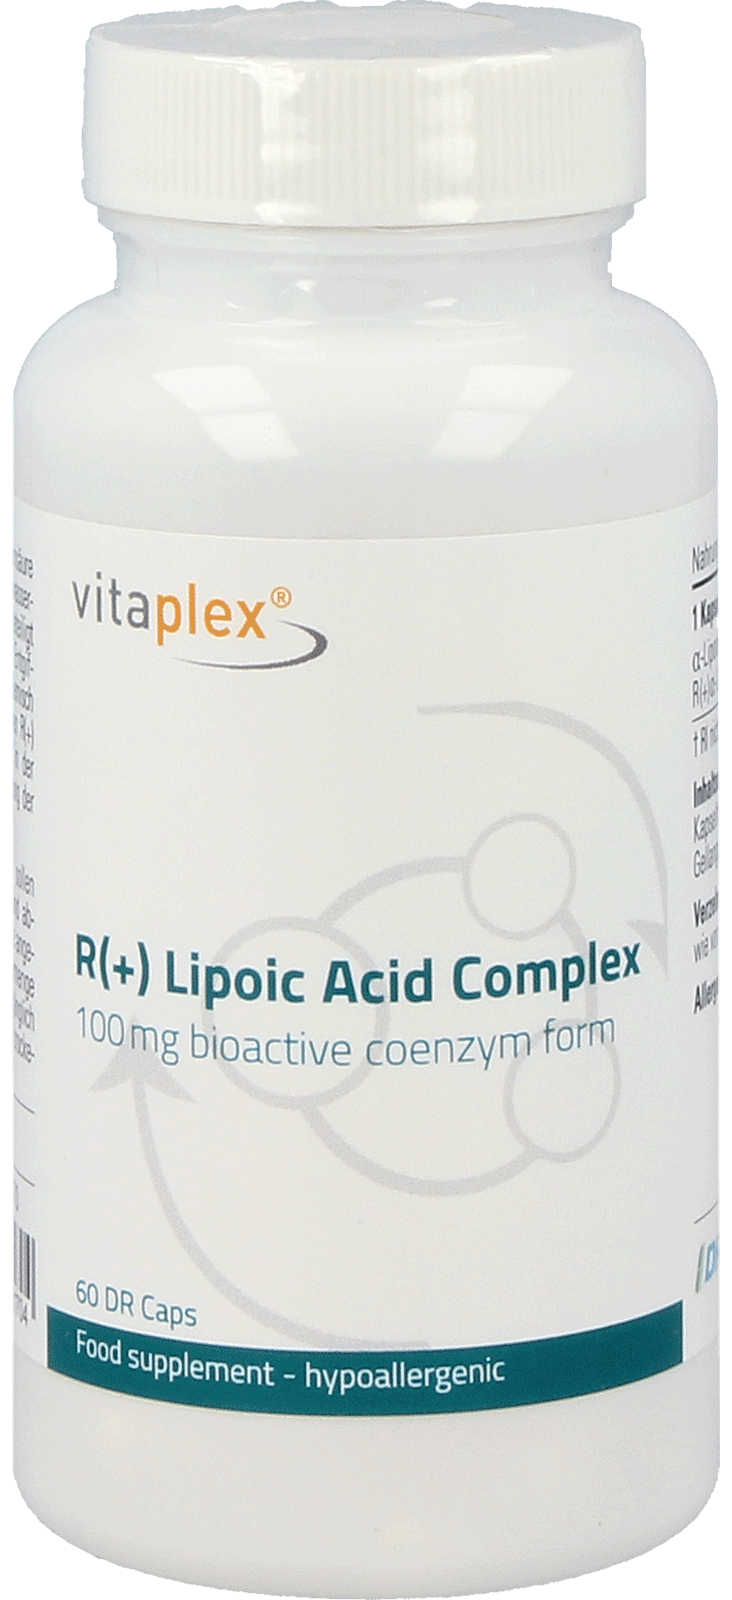 R(+) Lipoic Acid Complex 